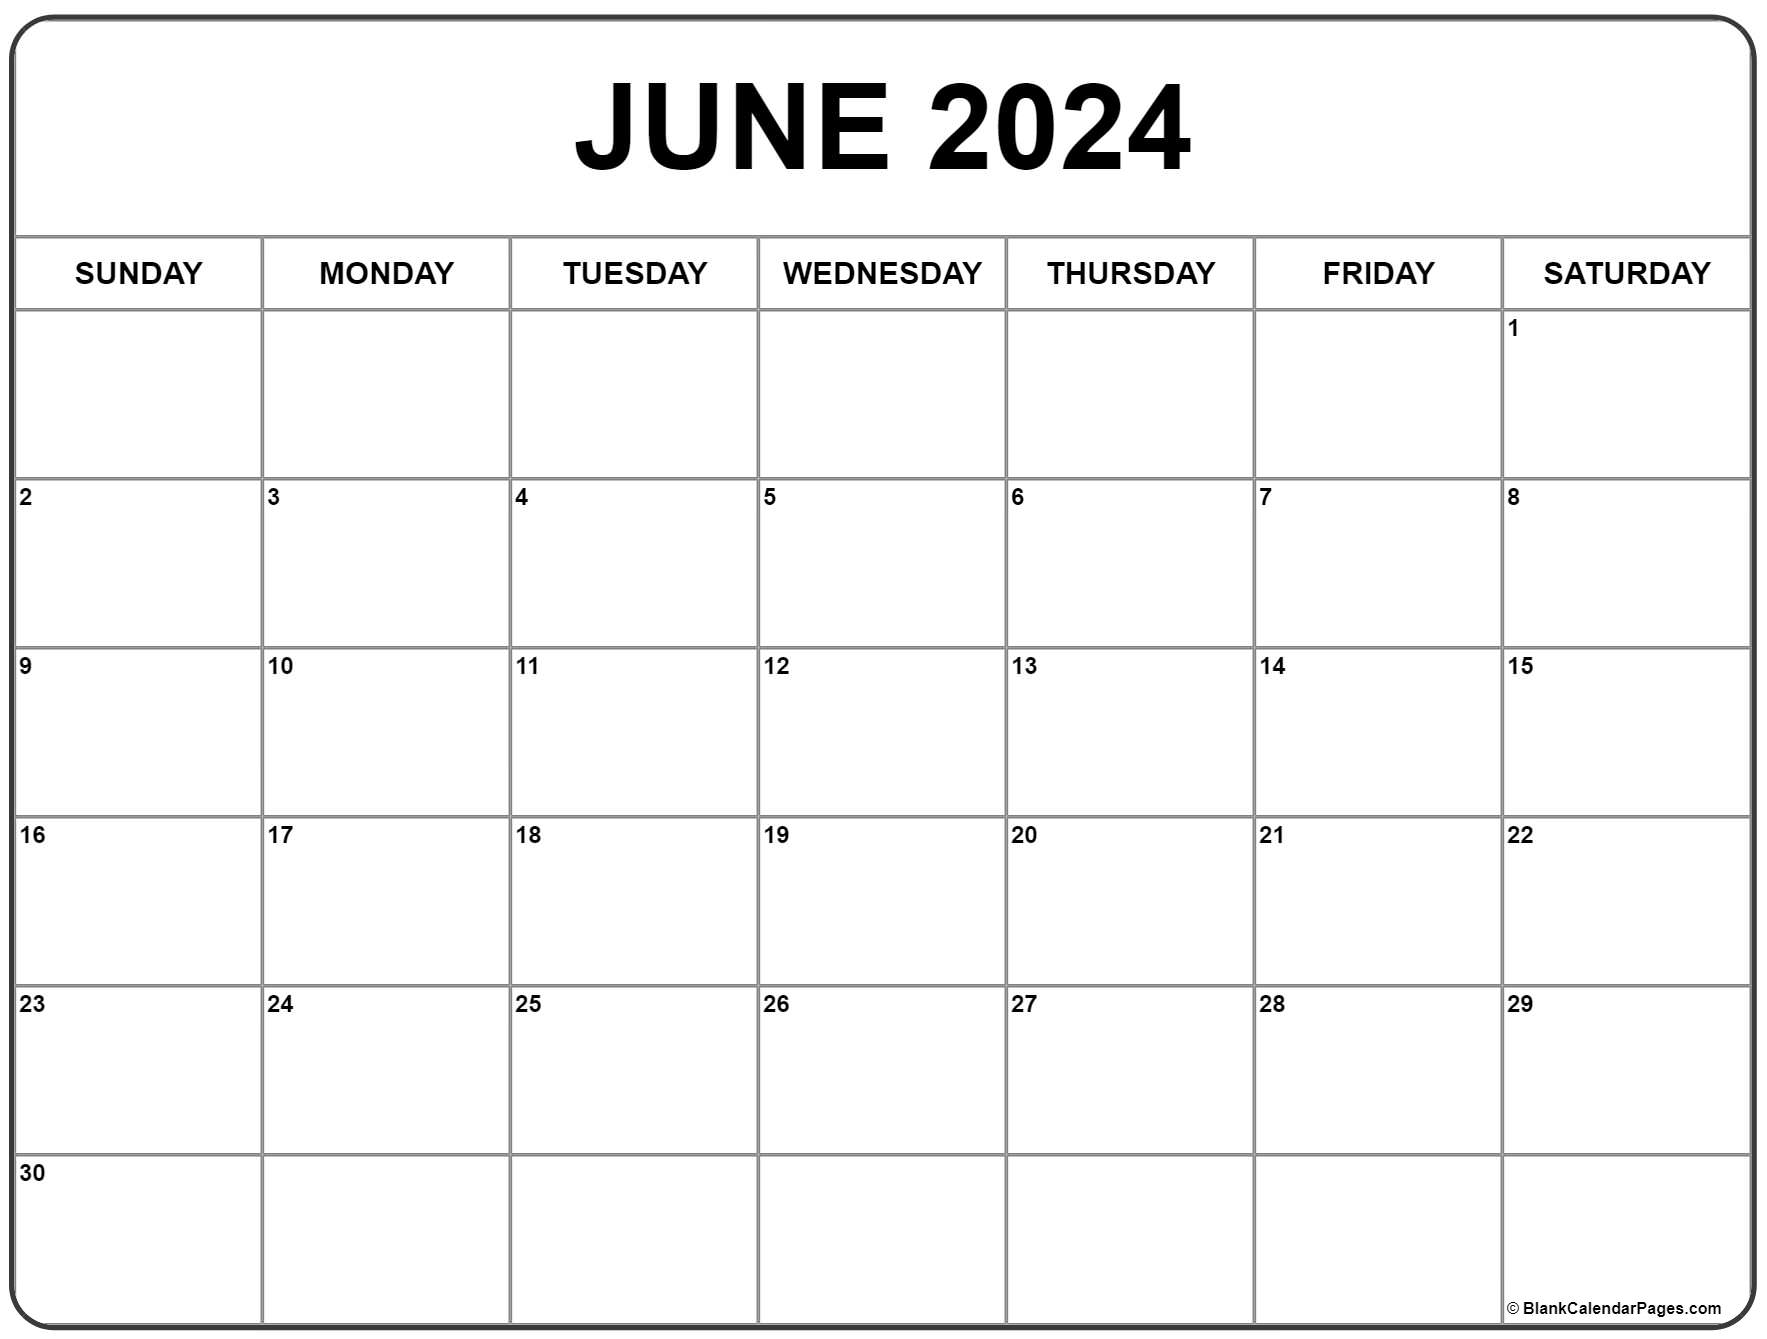 June 2024 Calendar | Free Printable Calendar for Free June 2024 Printable Calendar